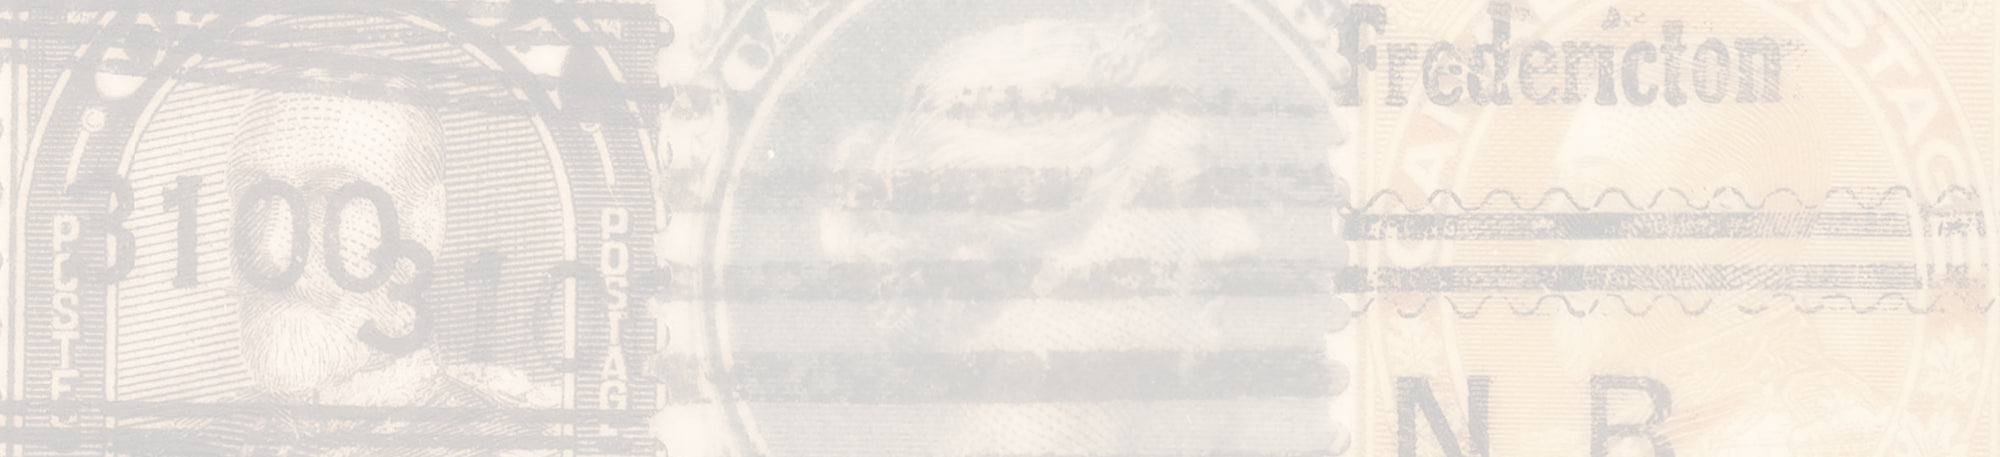 Stamp Gallery - Canadian Precancels